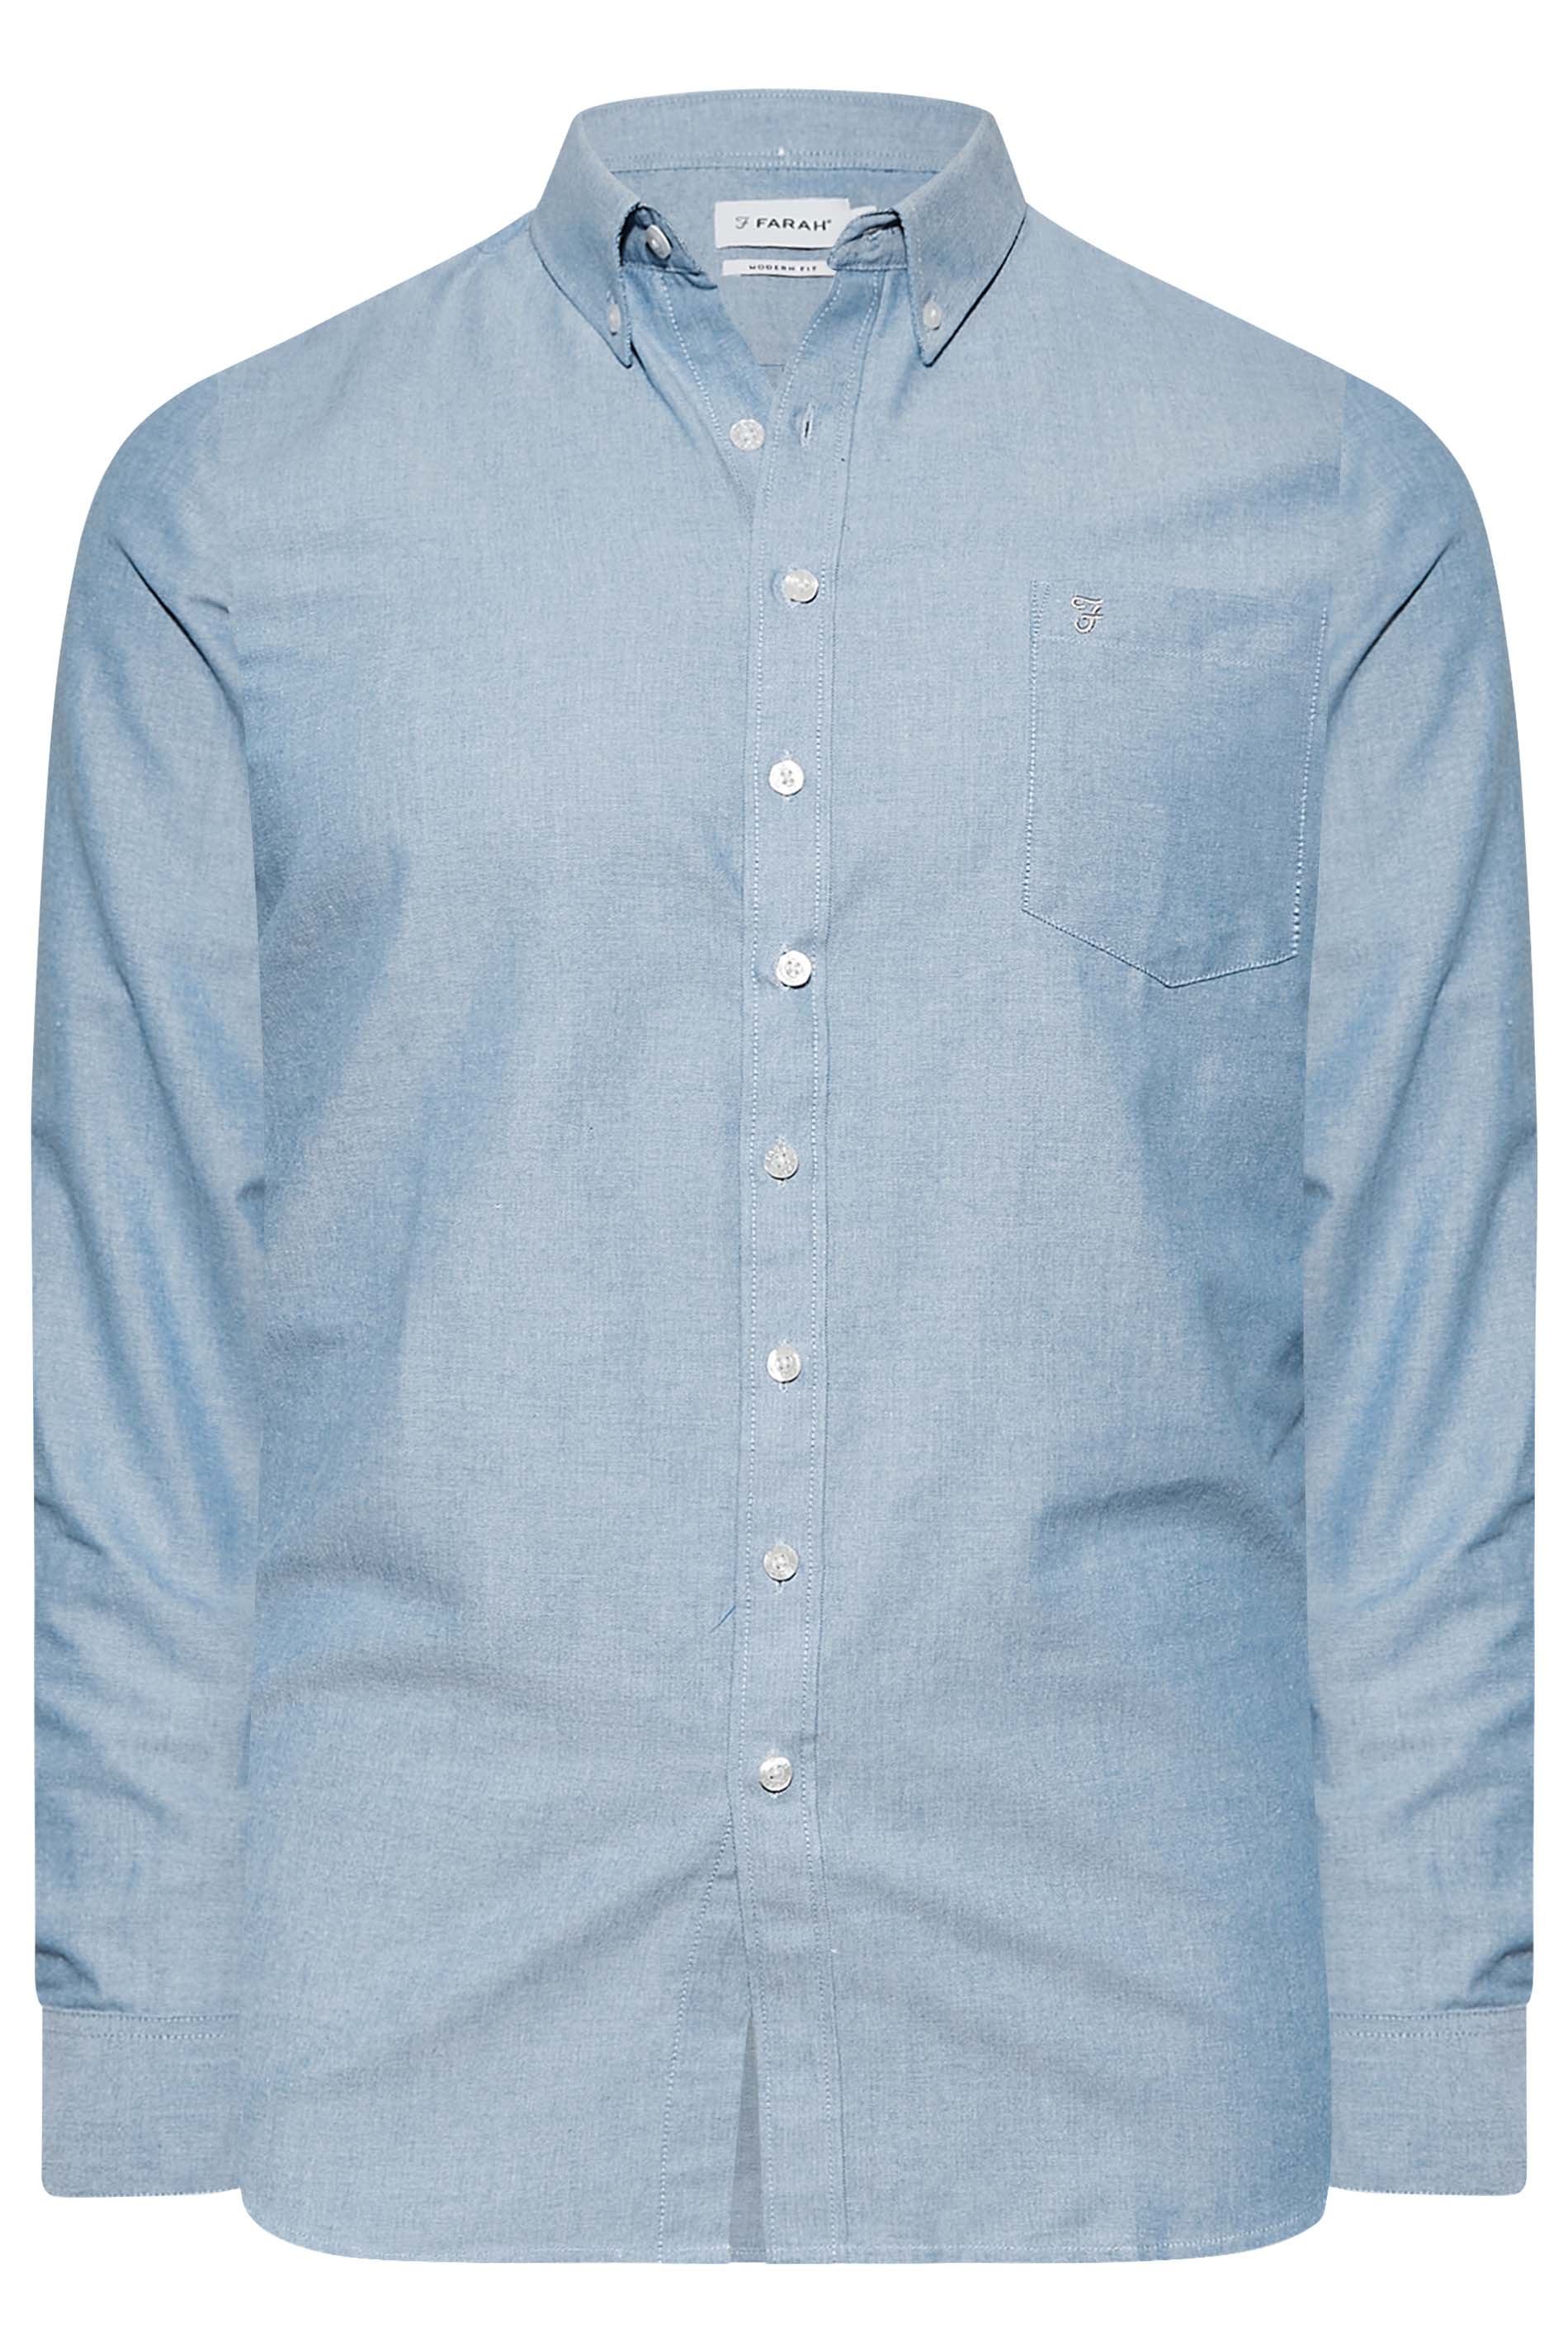 FARAH Big & Tall Blue Oxford Shirt | BadRhino 3